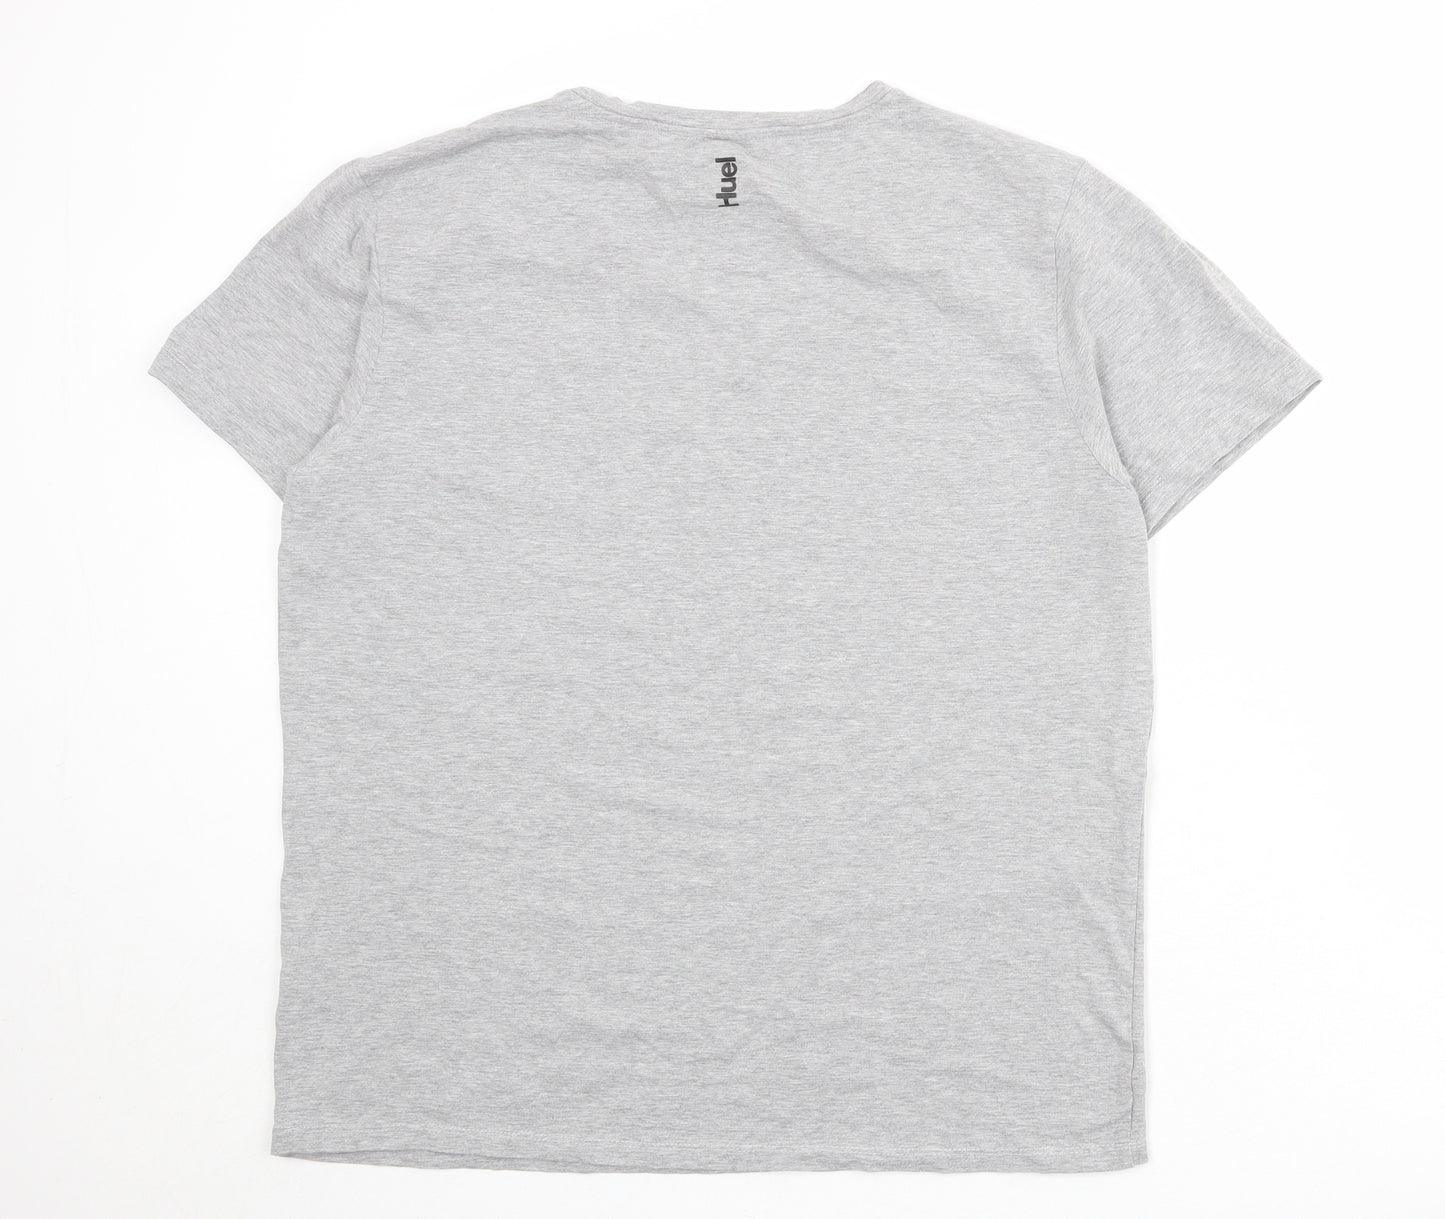 Huel Mens Grey Cotton T-Shirt Size 2XL Round Neck